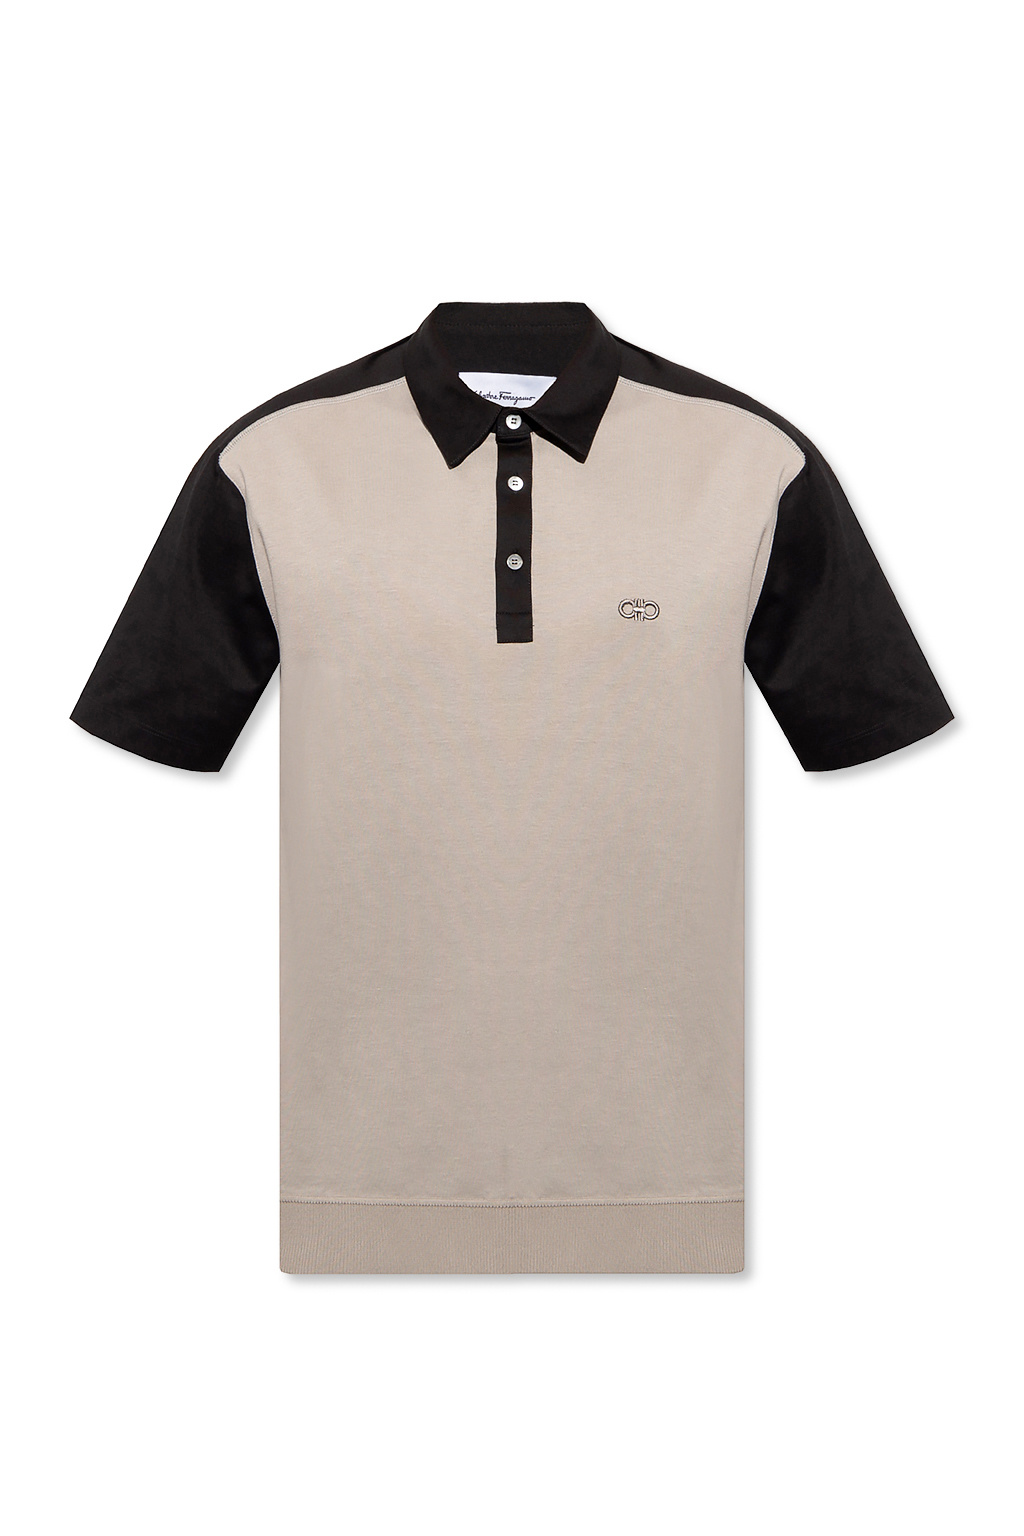 Salvatore Ferragamo Polo shirt with logo | Men's Clothing